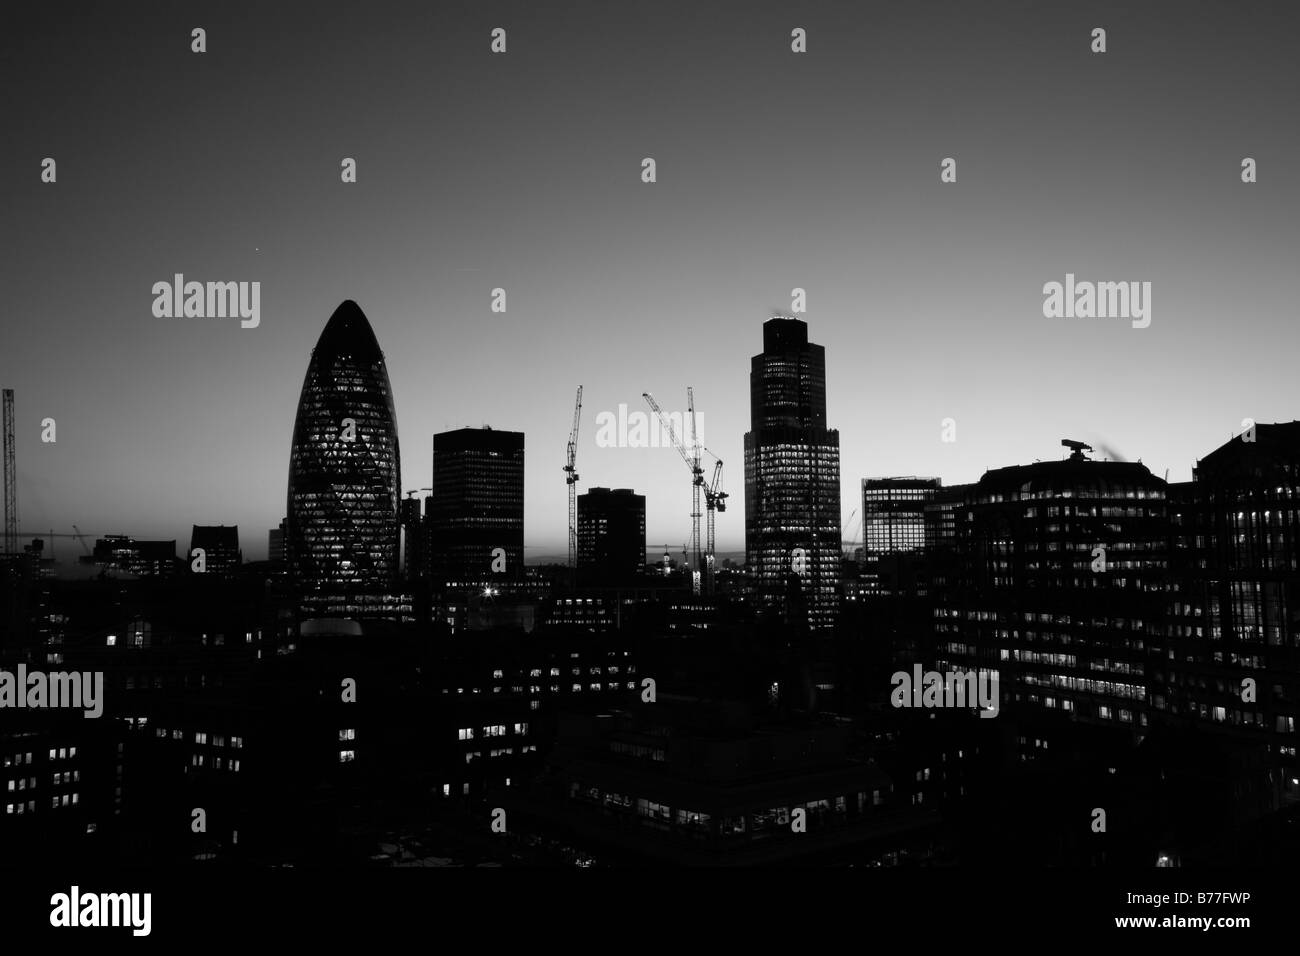 London skyline night Black and White Stock Photos & Images - Alamy